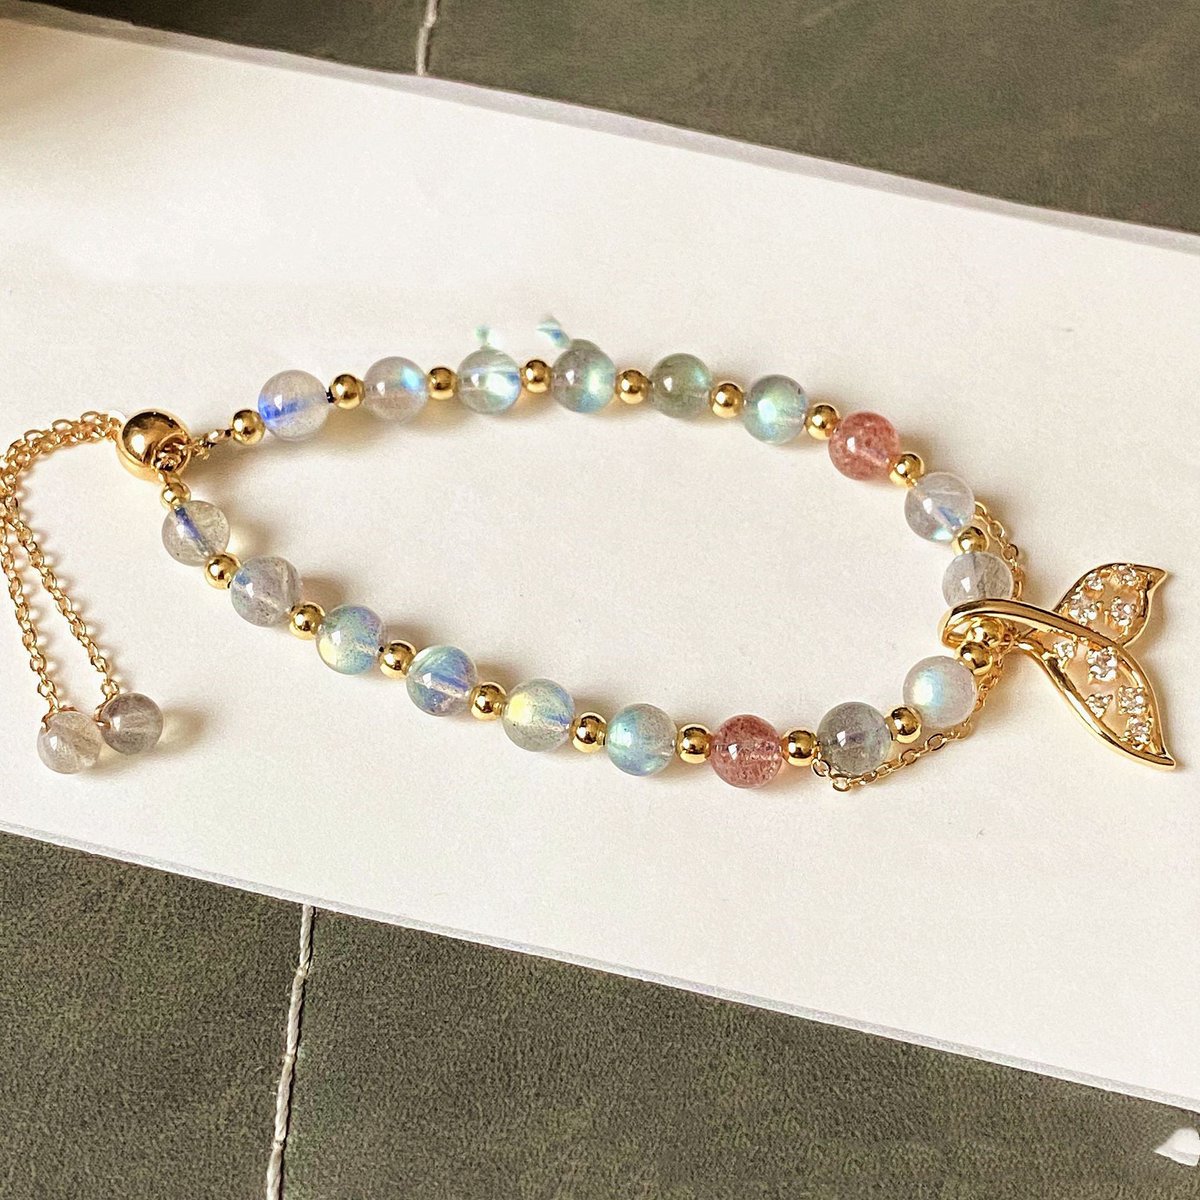 Experience the luxury of our bracelets.
shopuntilhappy.com/products/natur…

#jewelryjar #jewelrycreations #jewelryrestoration #braceletpattern #braceletforman #pearlbracelet #macramebracelet